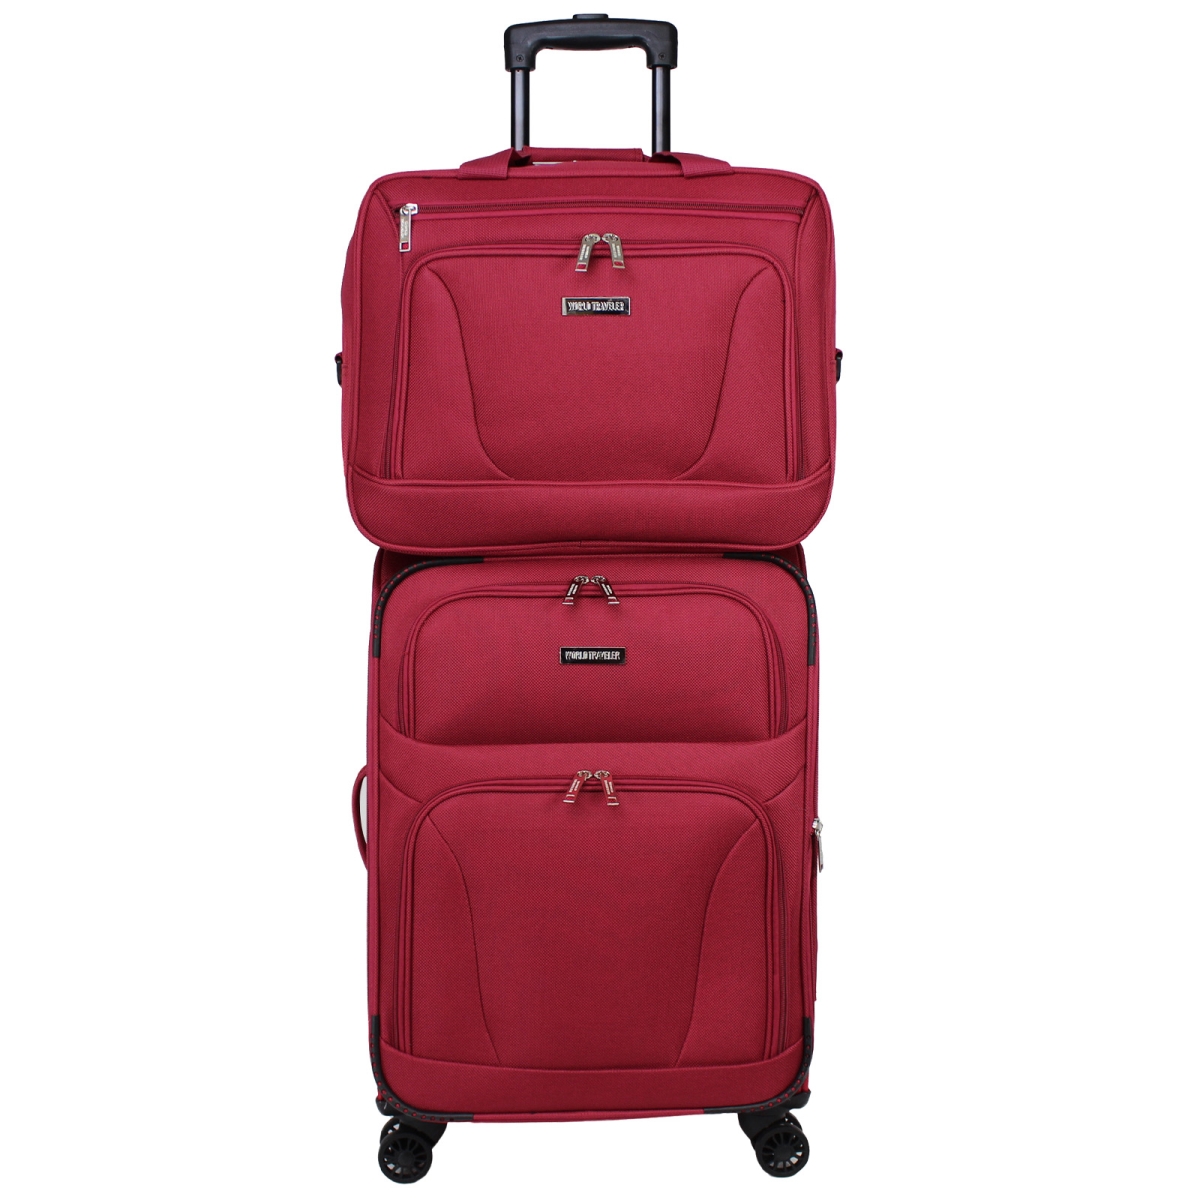 Wt100-2-burgundy Embarque Lightweight Carry-on Luggage Set, Burgundy - 2 Piece